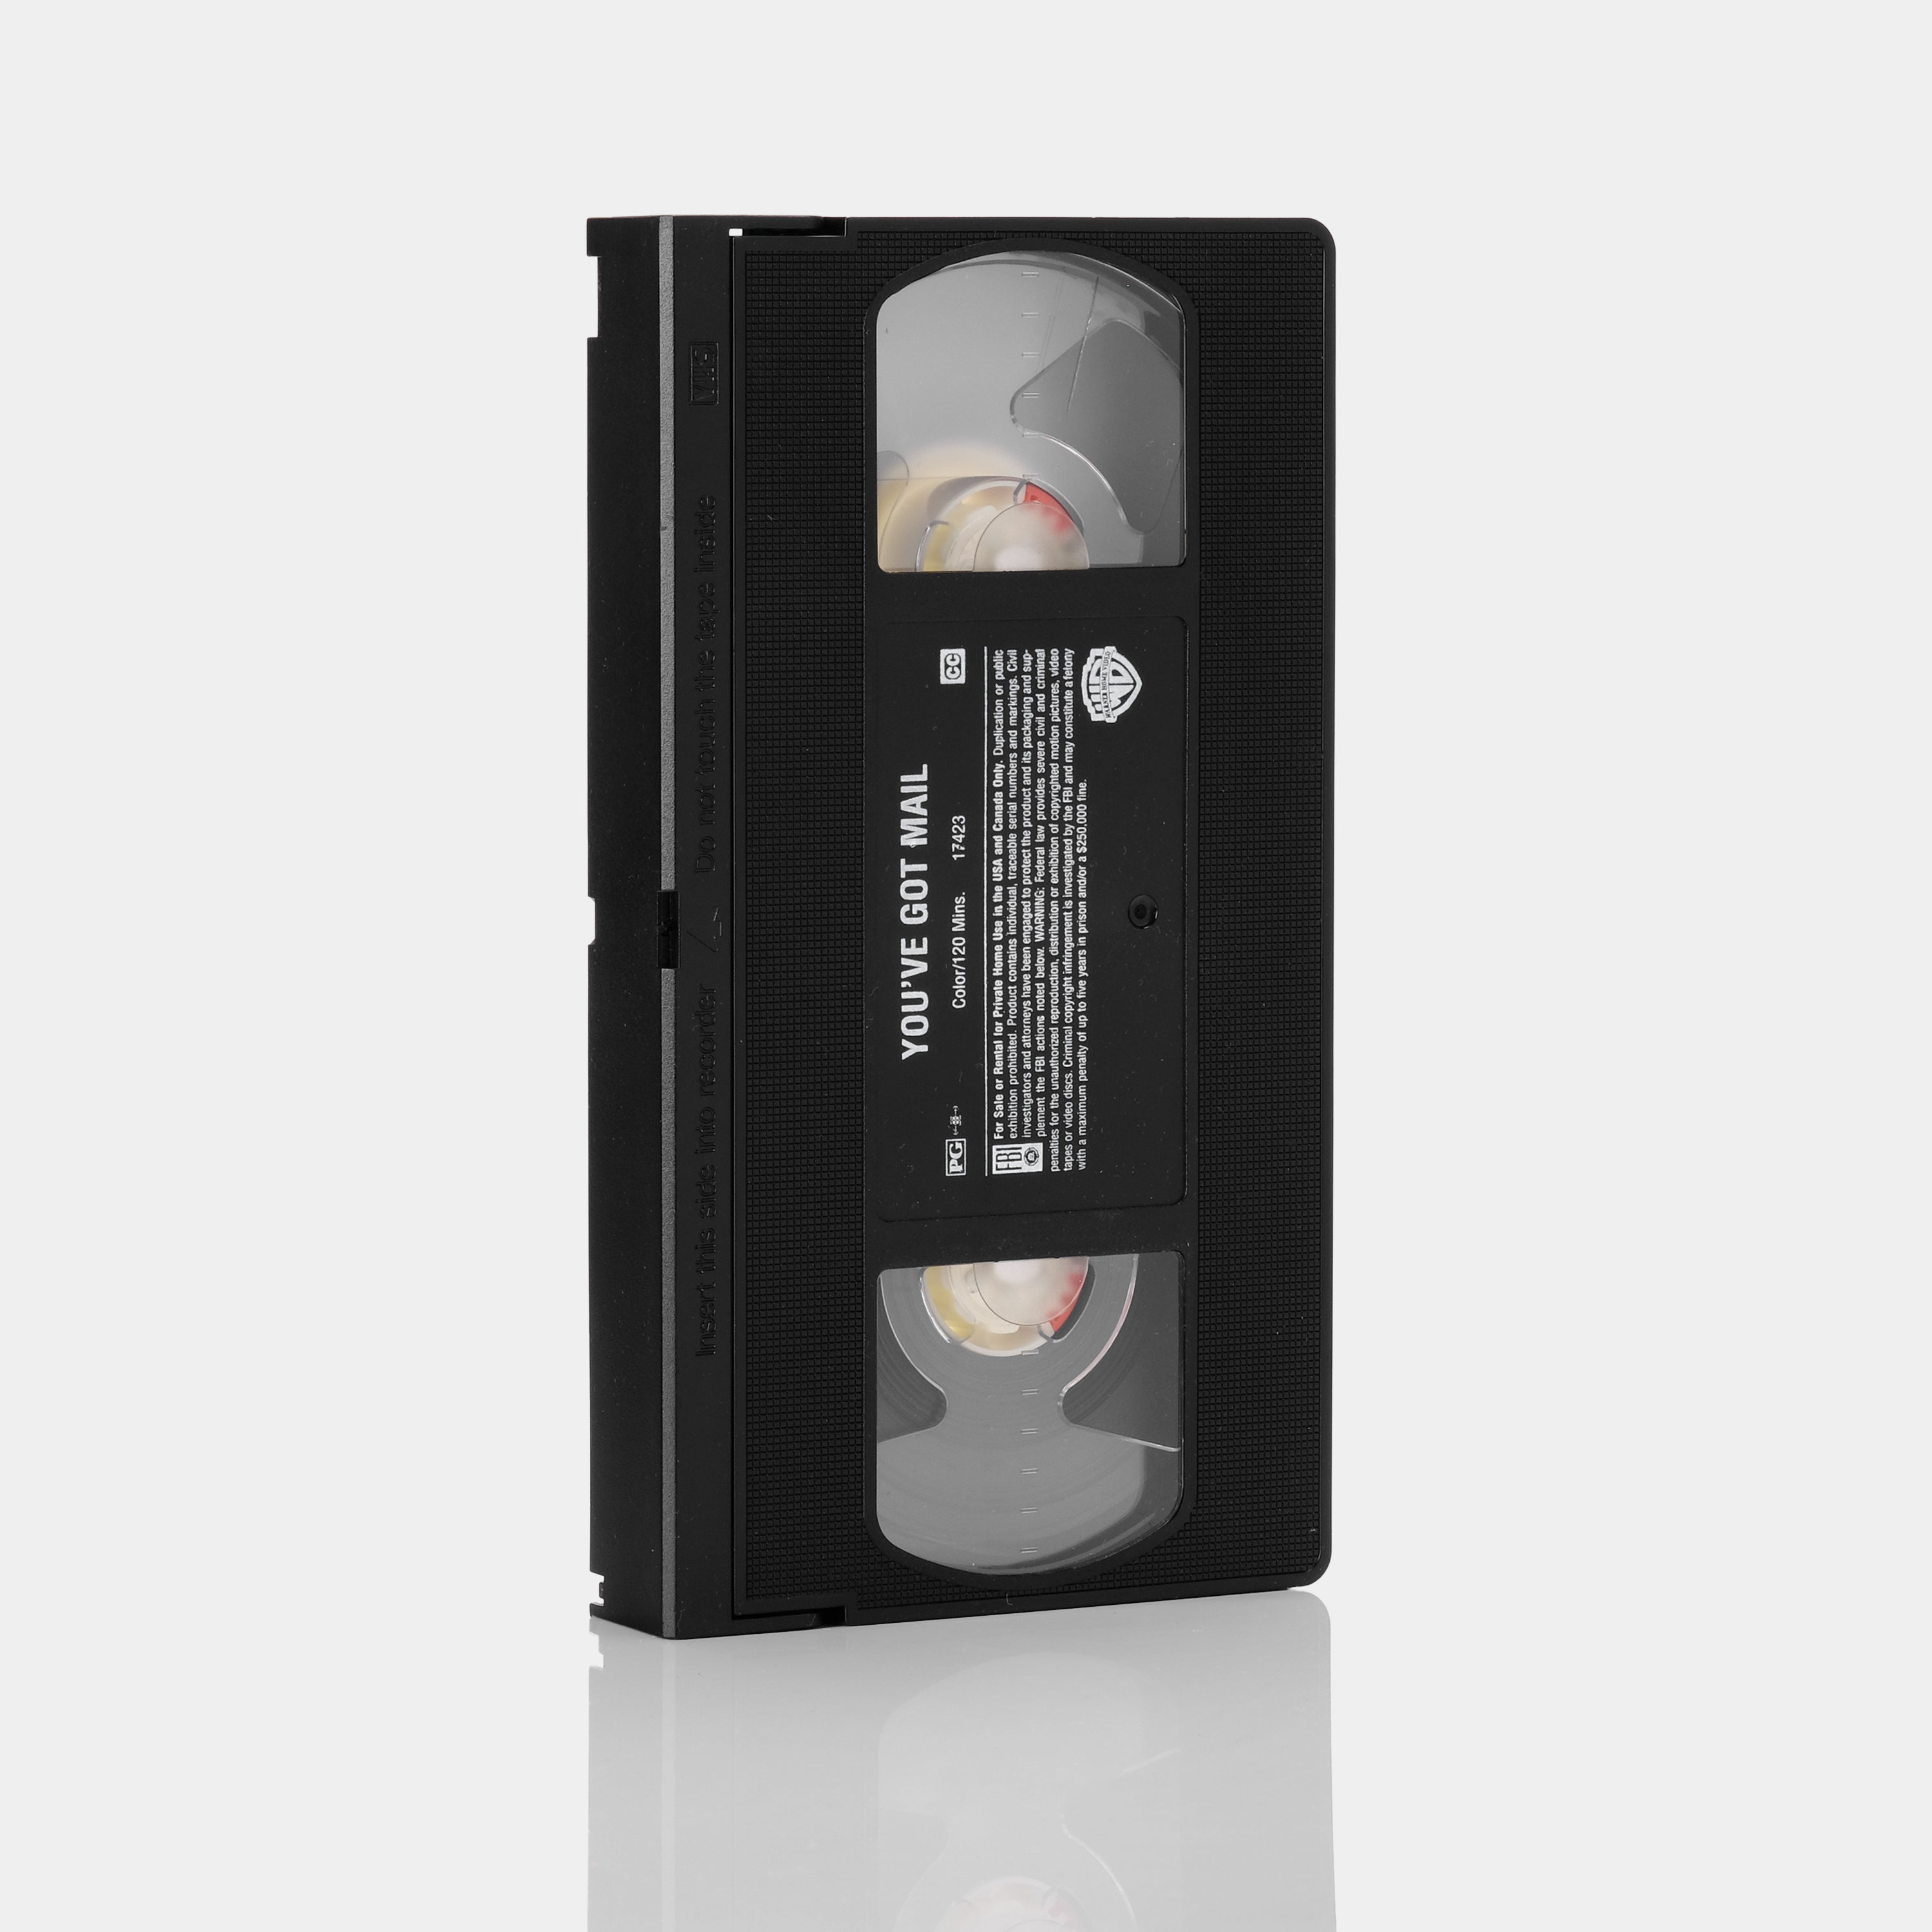 You've Got Mail VHS Tape